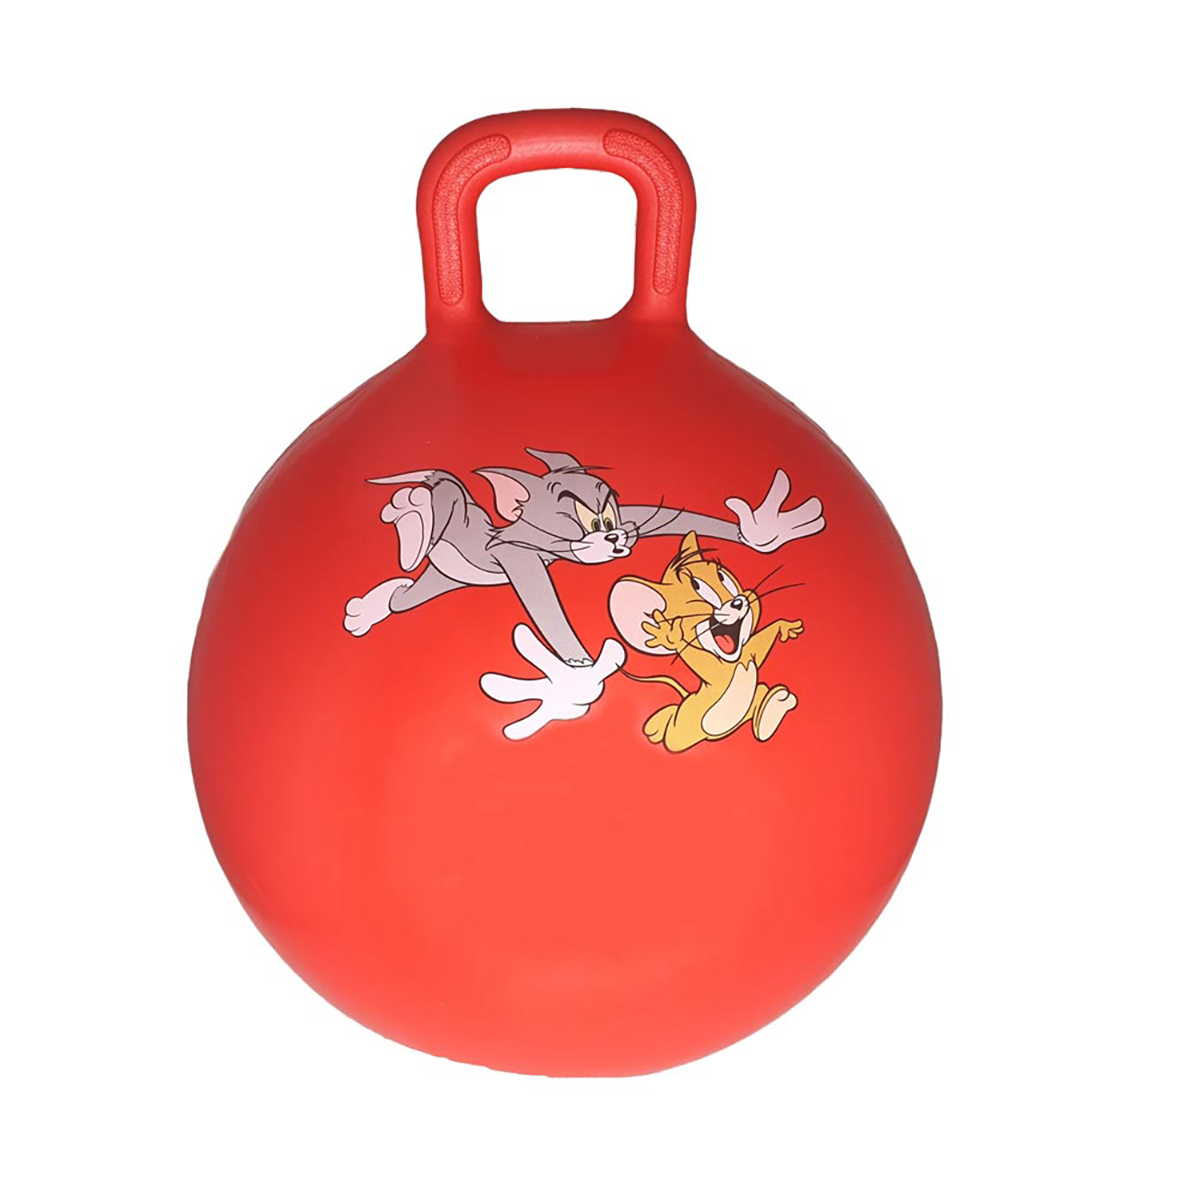 NOON Hüpfball Tom und Spielset Jerry, rot cm 45 mehrfarbig